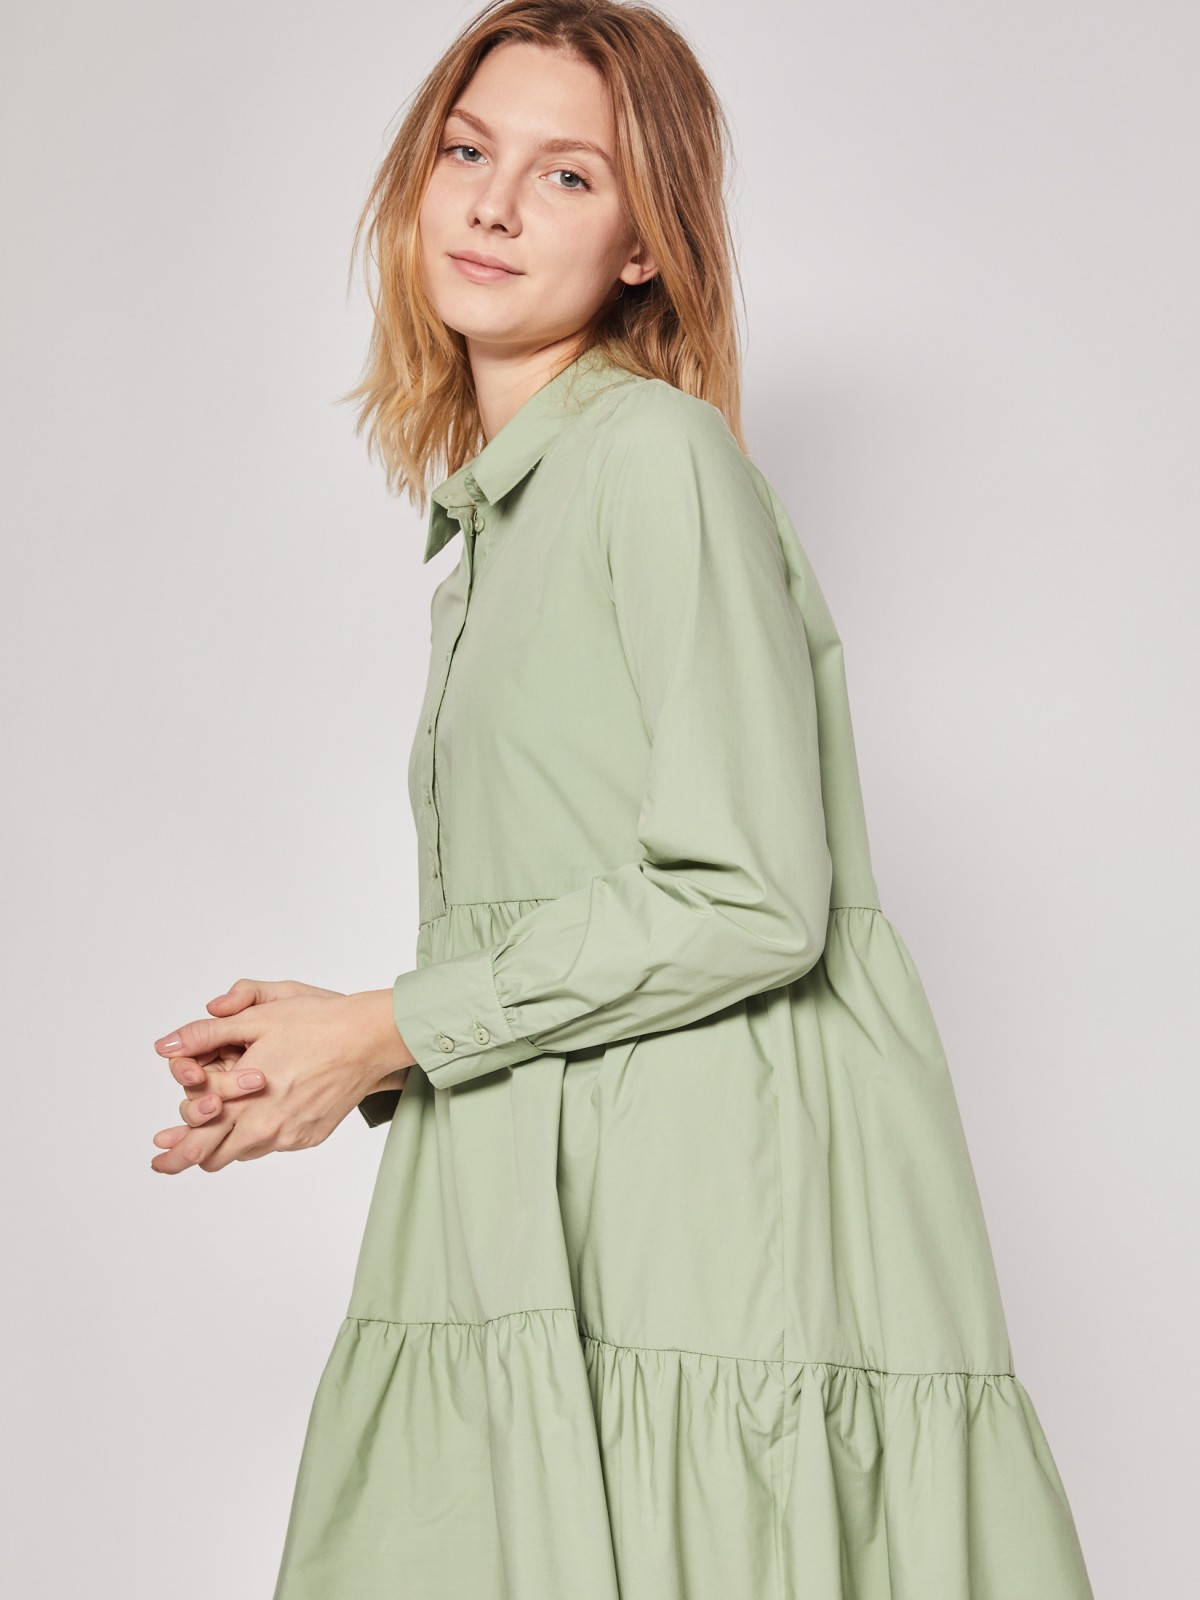 Ярусное платье-рубашка zolla 022138291223, цвет светло-зеленый, размер XS - фото 3